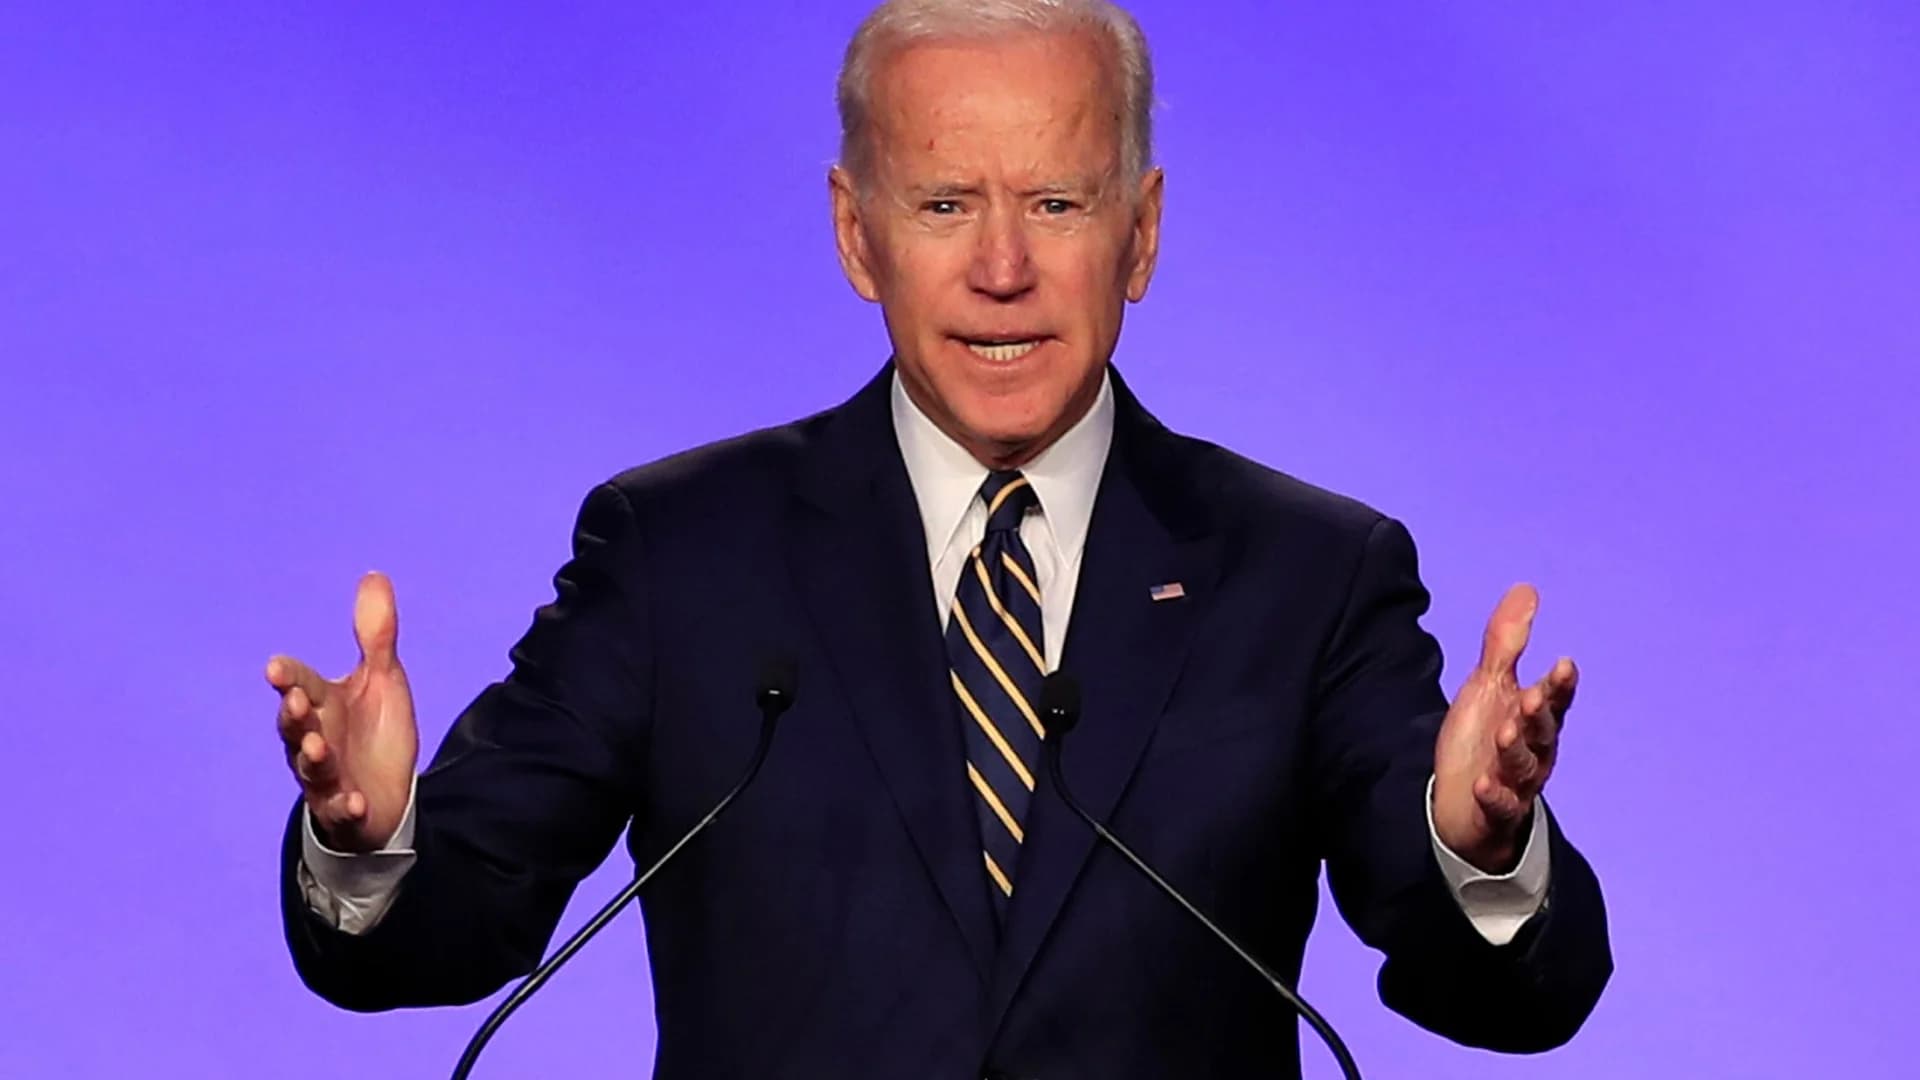 AP source: Biden to announce 2020 bid on Thursday